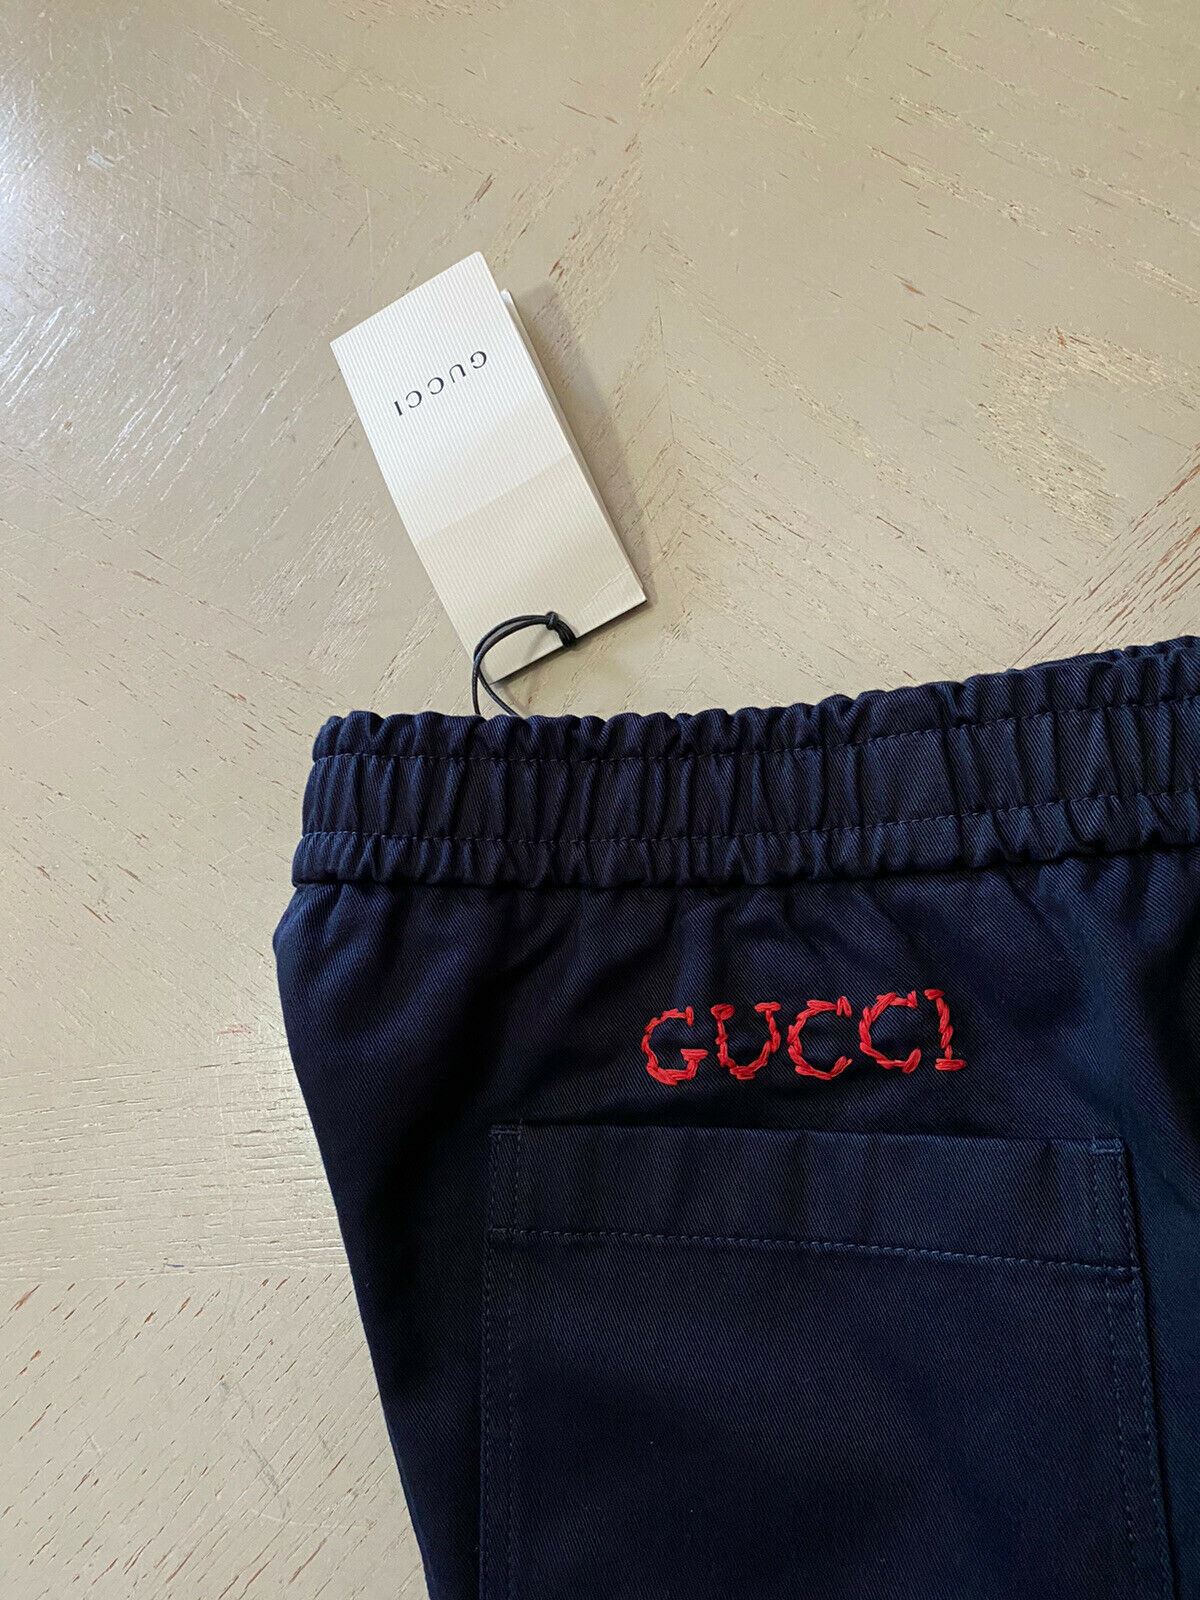 Neu mit Etikett: 1100 $ Gucci Military Cotton Herrenhose Navy 34 US (50 Eu) Italien